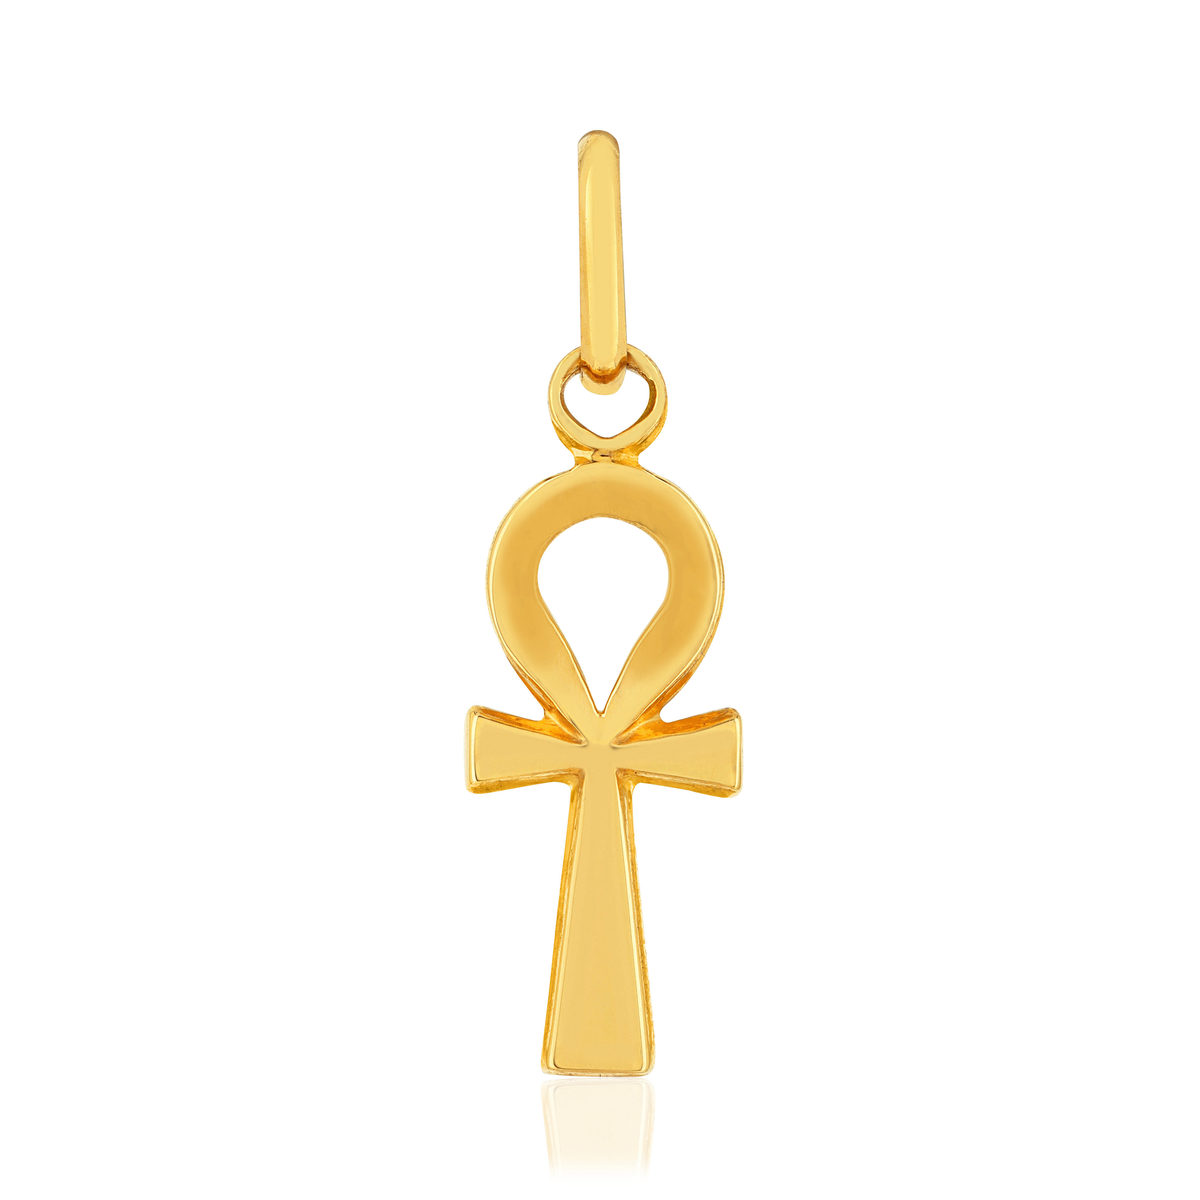 Pendentif or 375 jaune, motif croix egyptienne